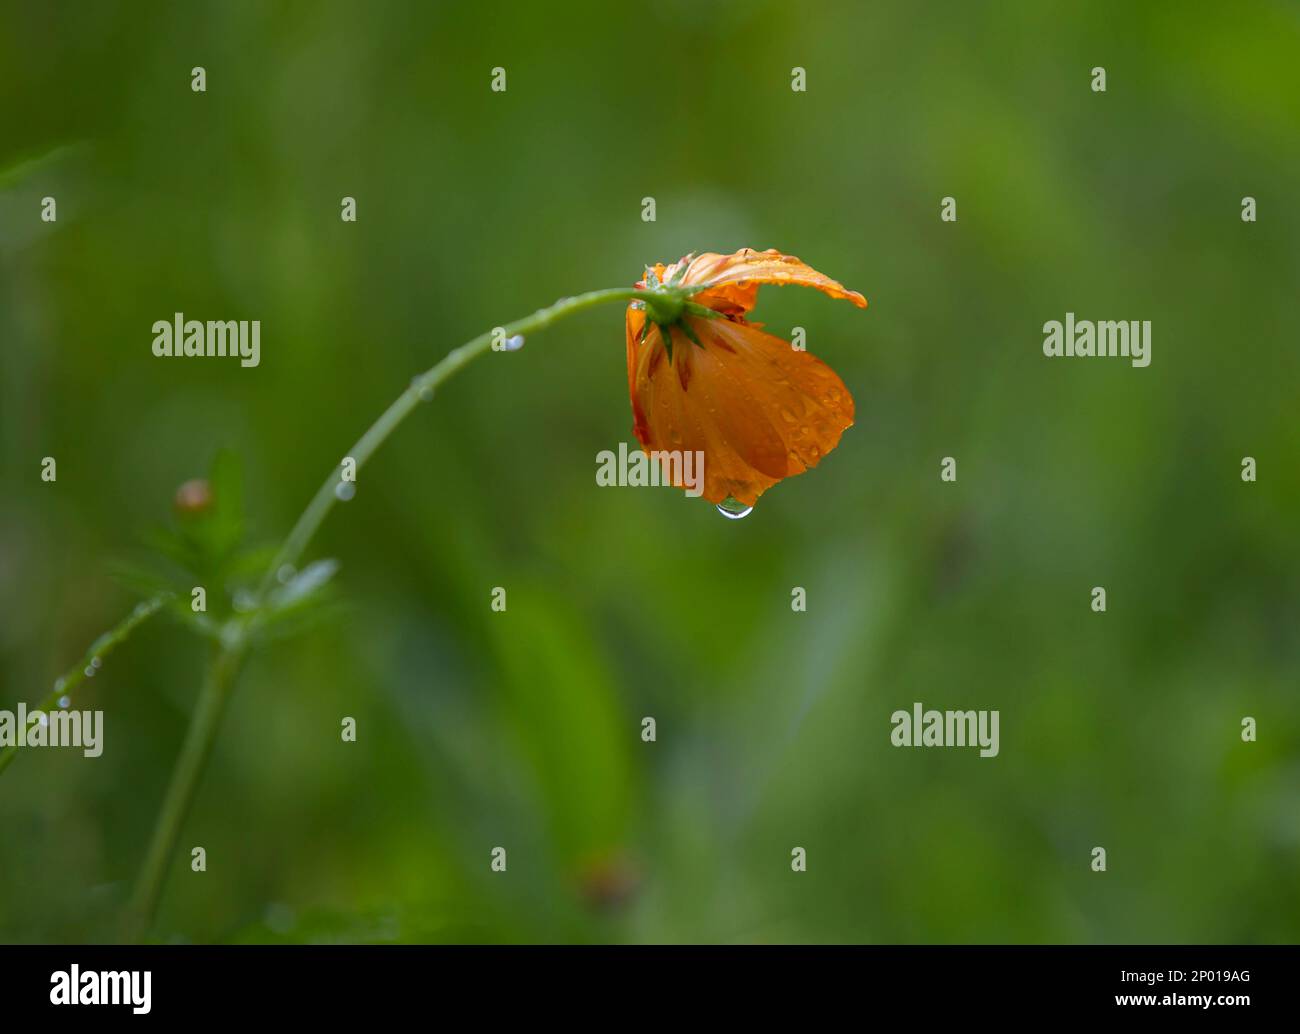 An orange poppy flower in the rain Stock Photo